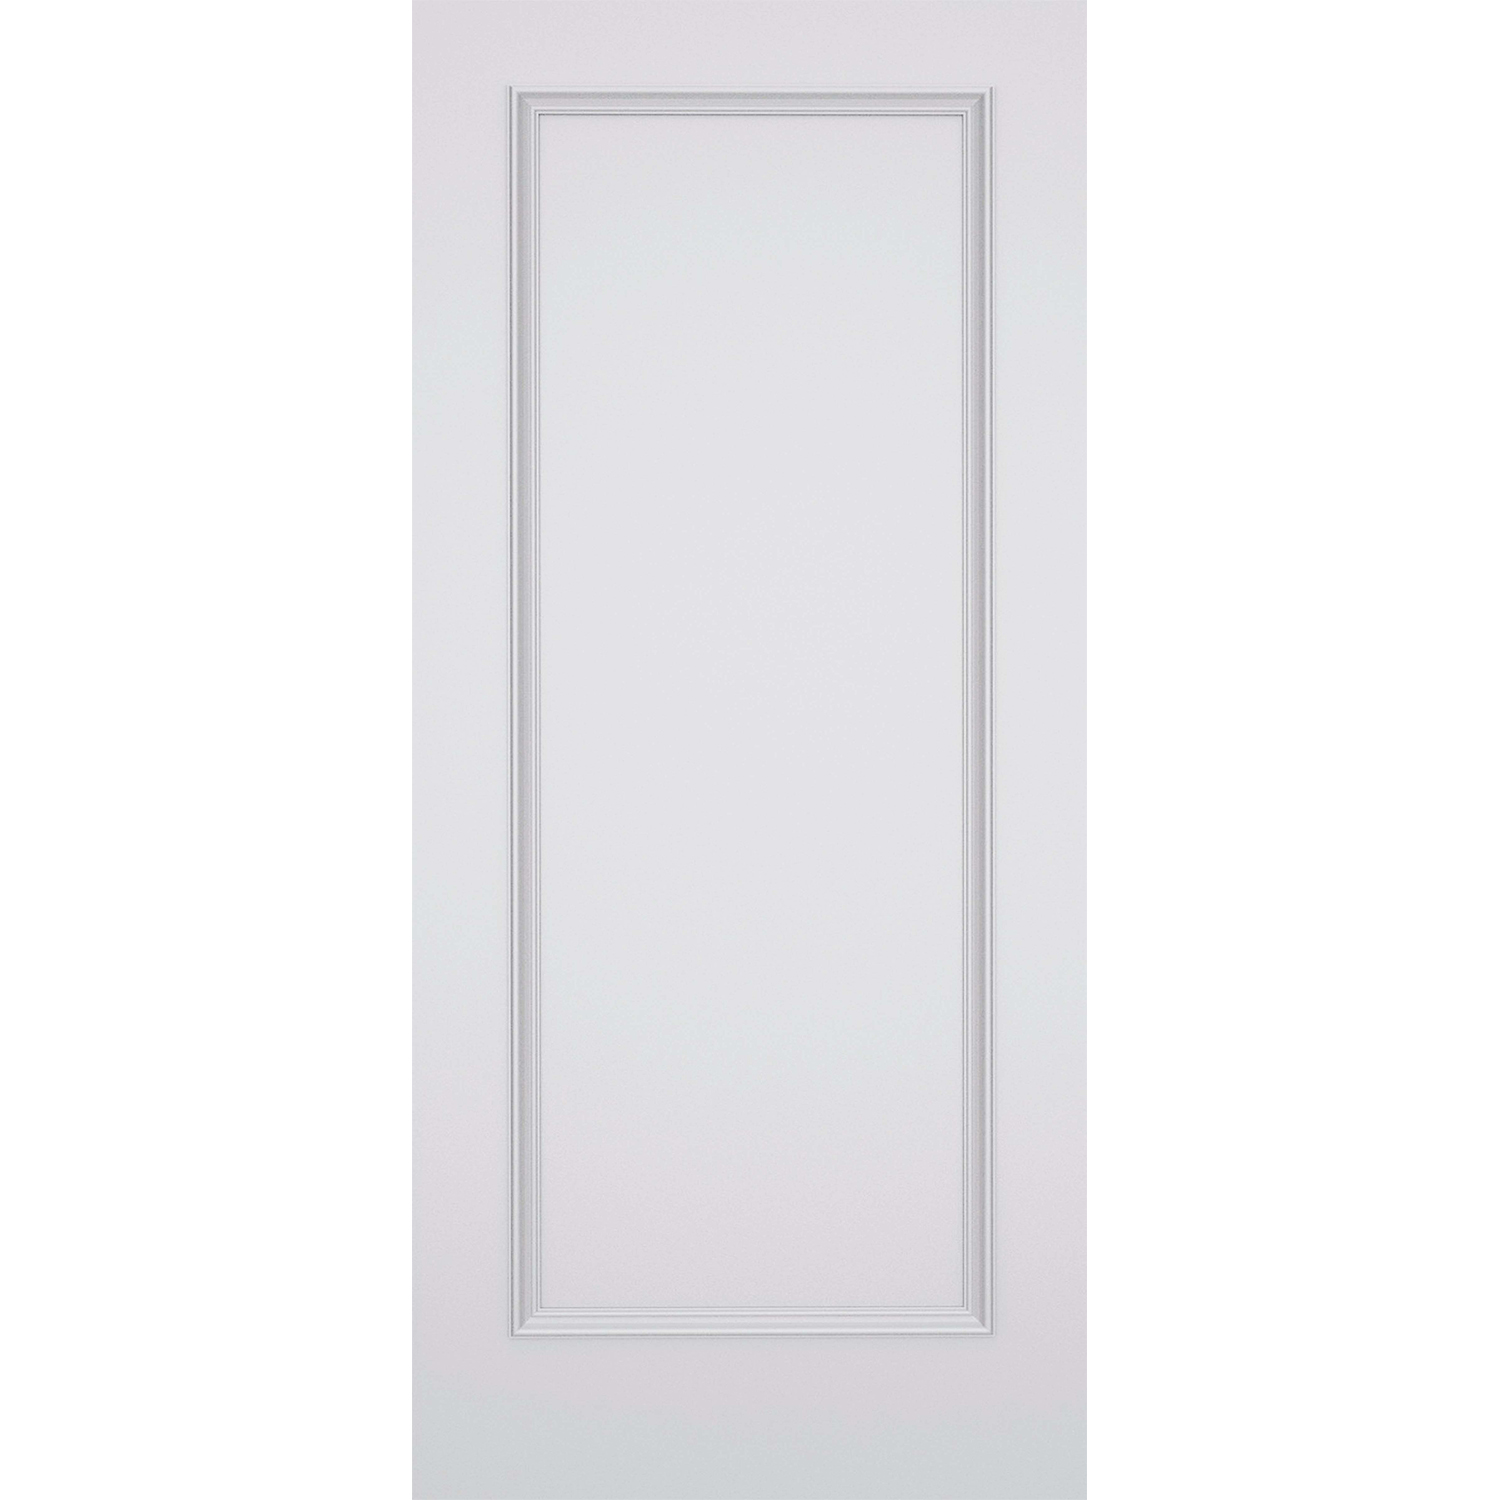 1 Panel 80 x 36 x 1-3/8 Smooth Hollow Door Raised